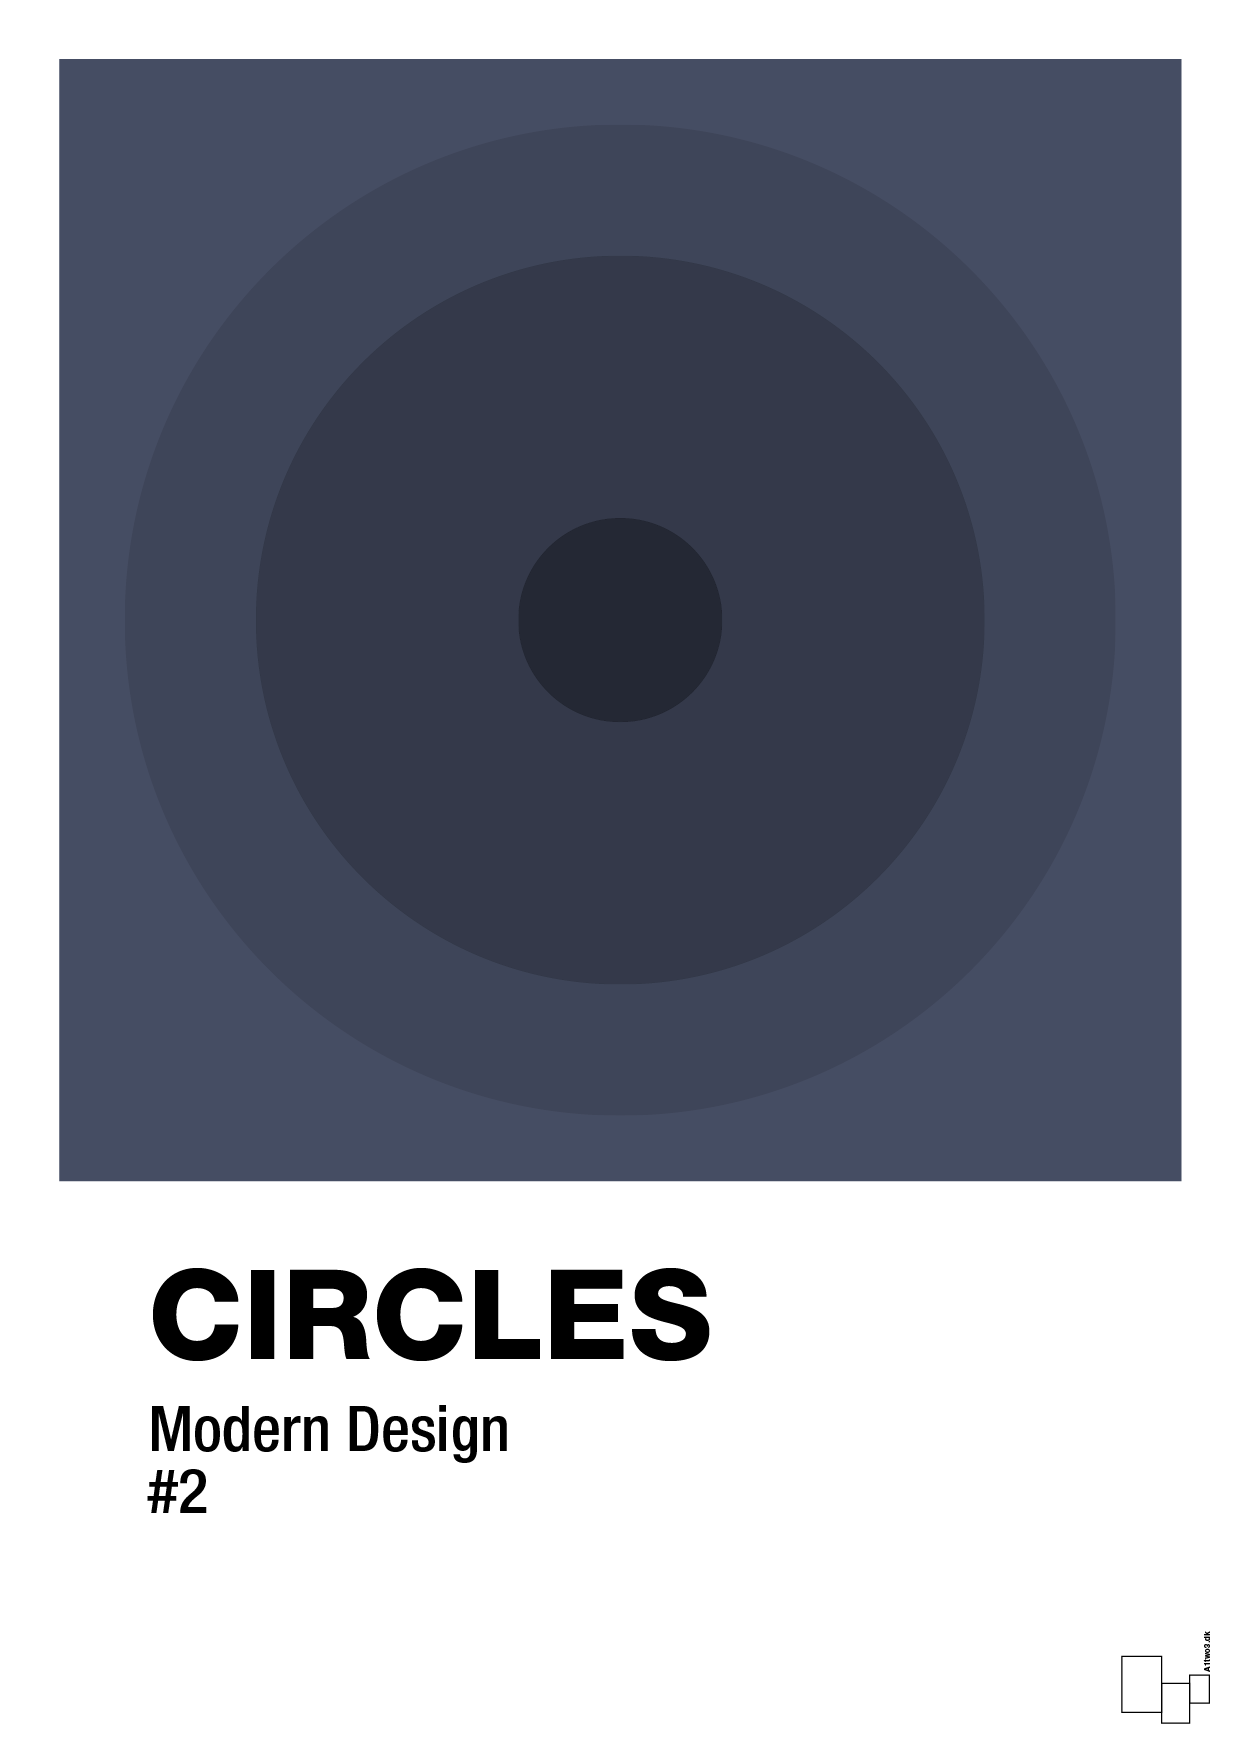 circles #2 - Plakat med Grafik i Petrol